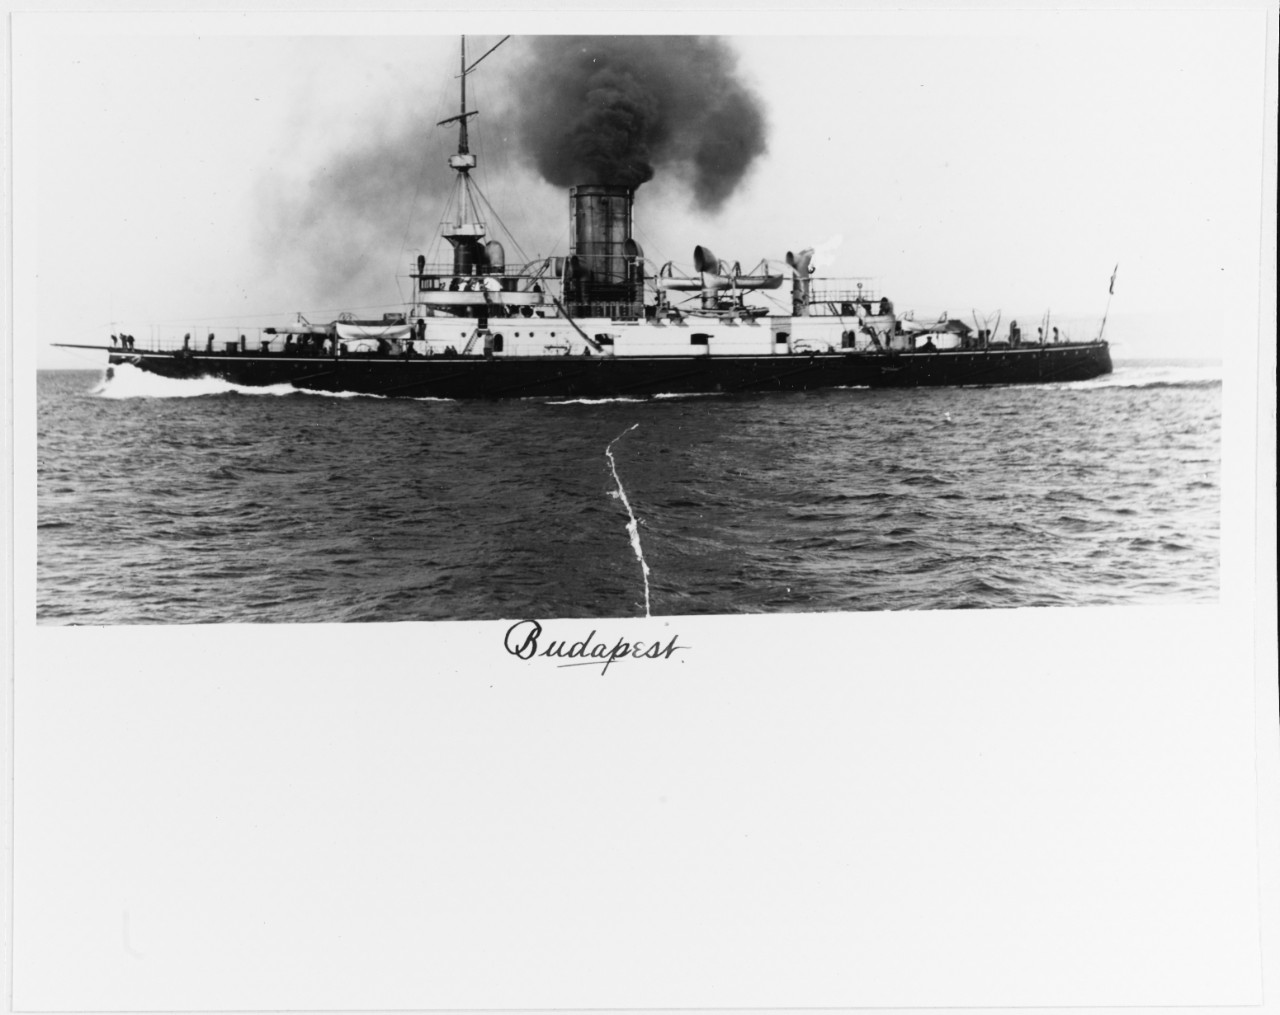 BUDAPEST (Austrian coast defense battleship, 1896-1920)